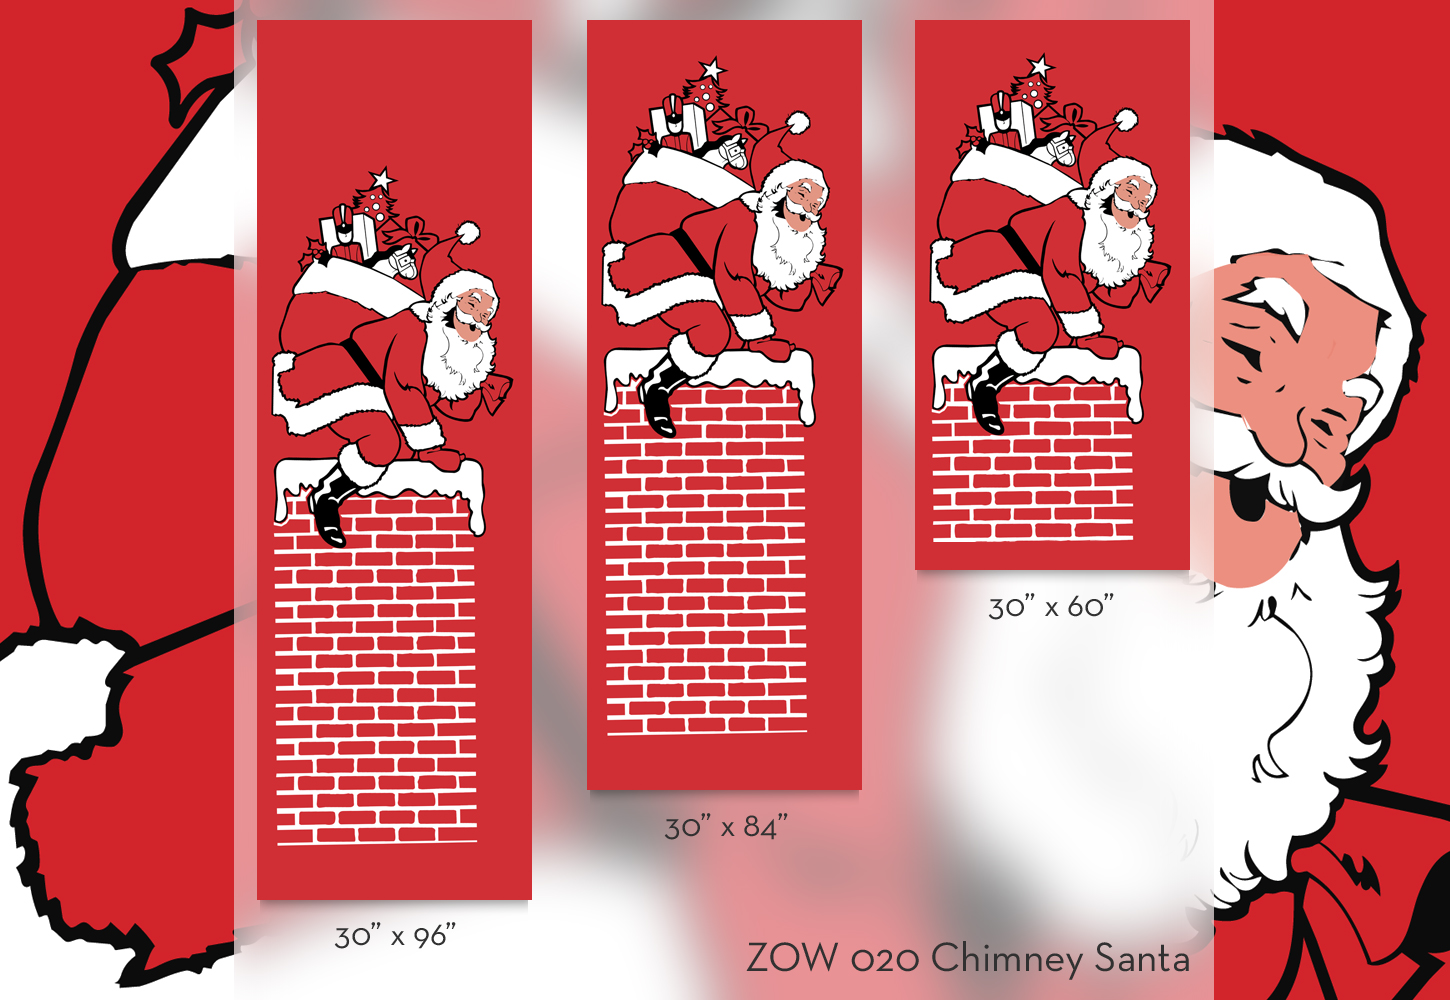 ZOW 020 Chimney Santa